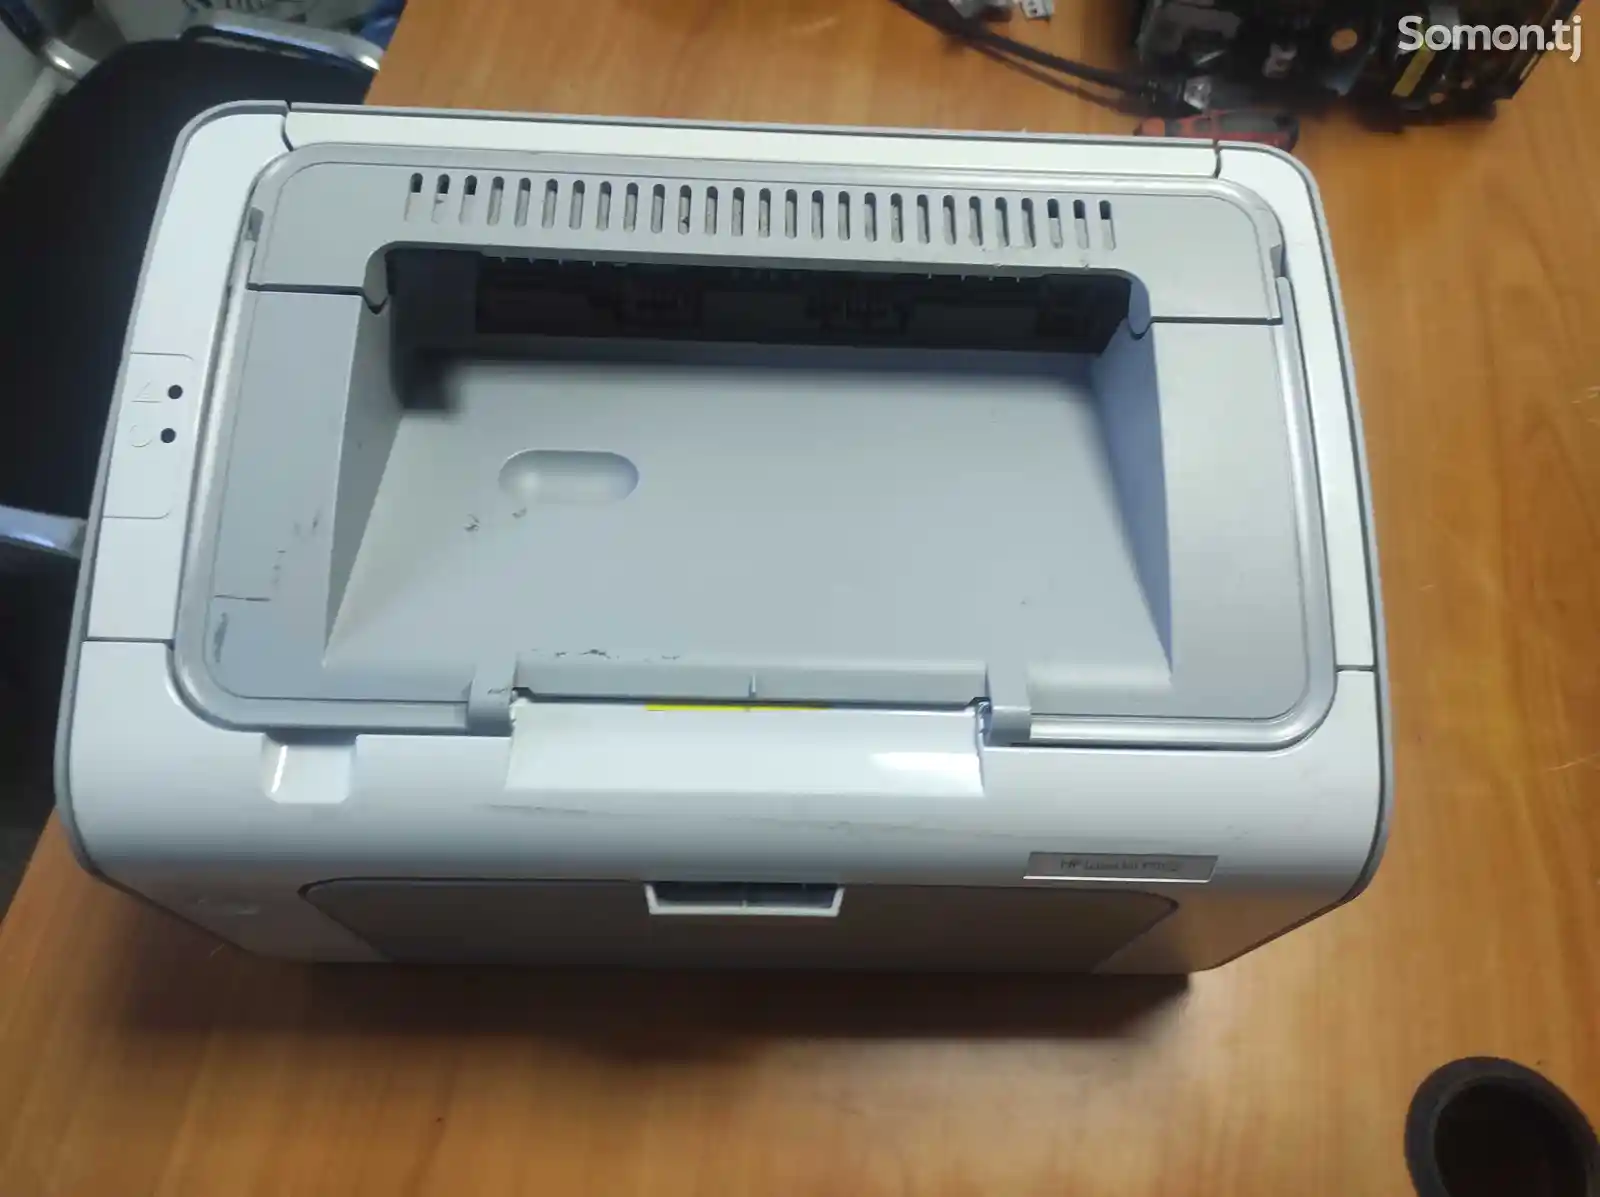 Принтер HP-2